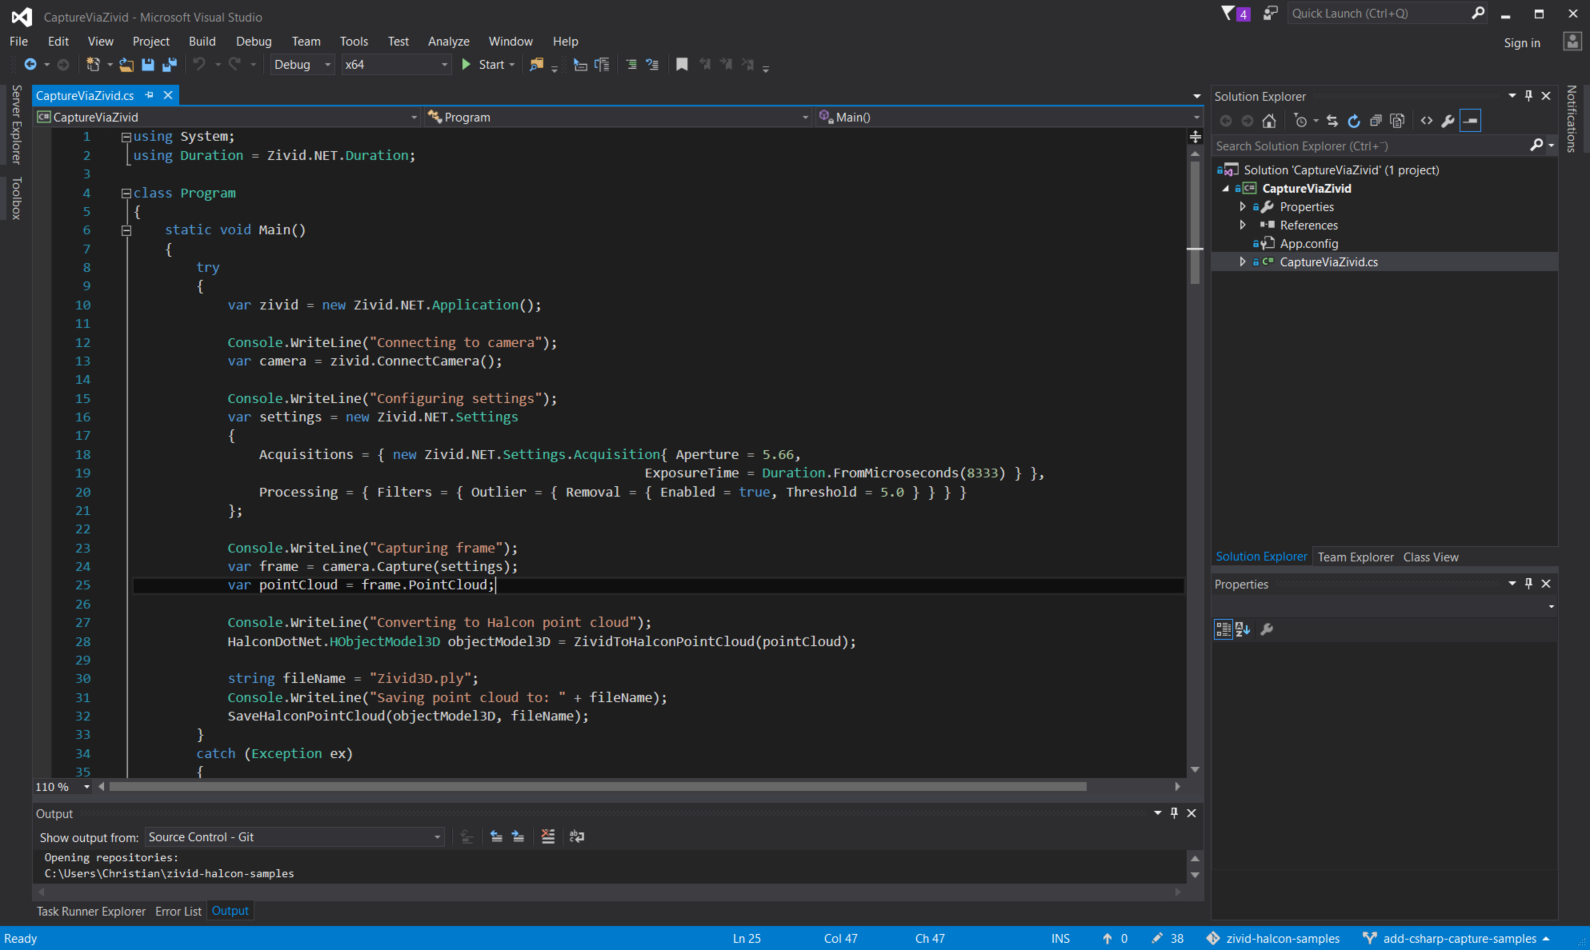 HALCON capture via zivid script in Visual Studio